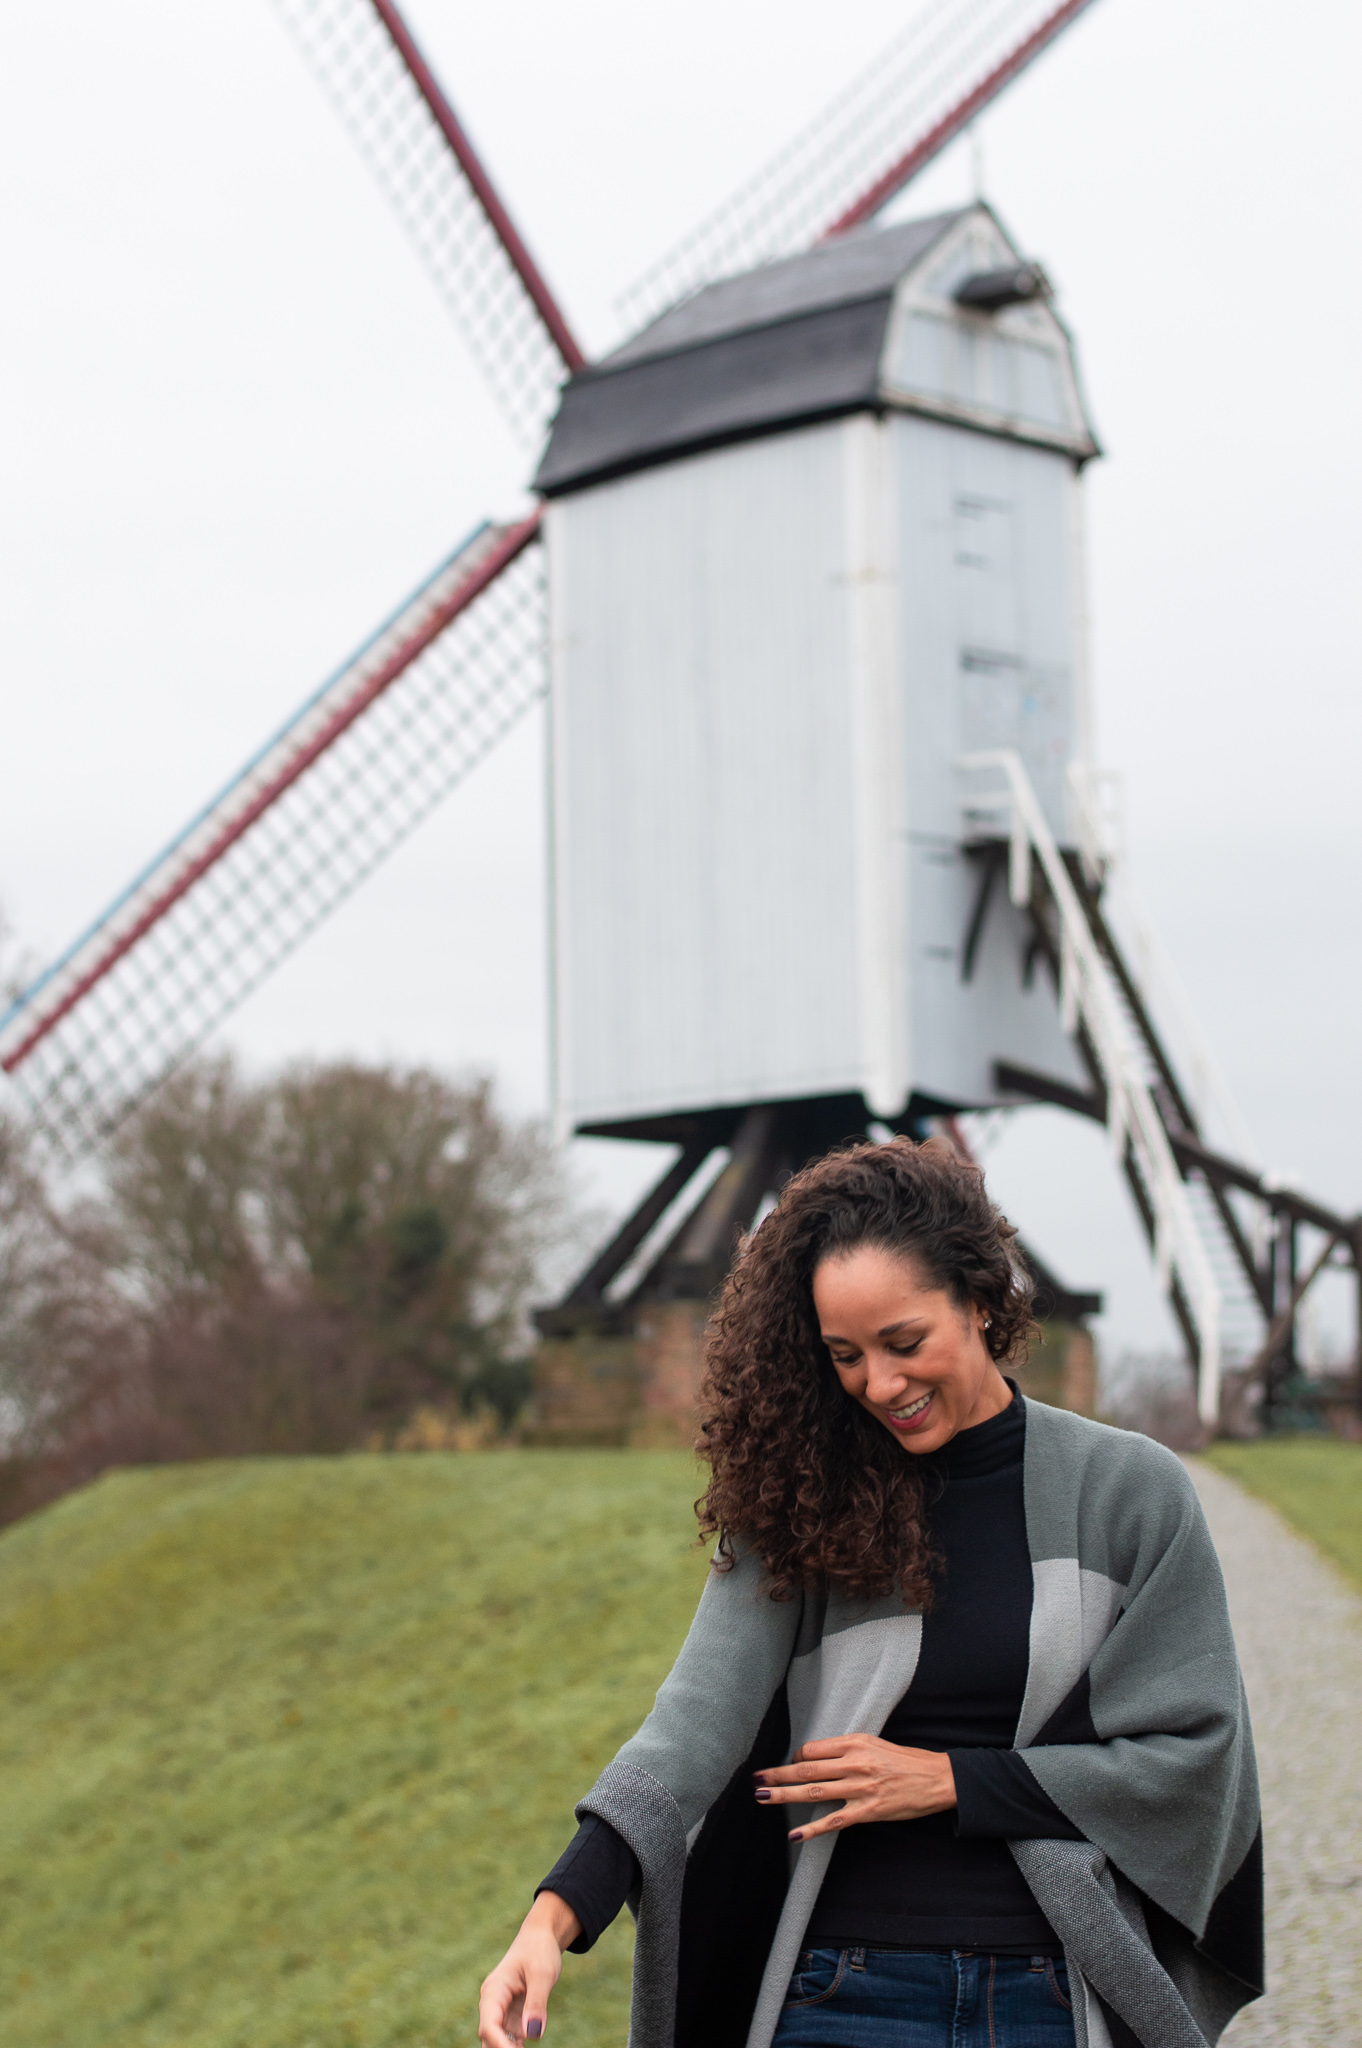 Exploring the Bonne Chieremolen windmill in Bruges, Belgium